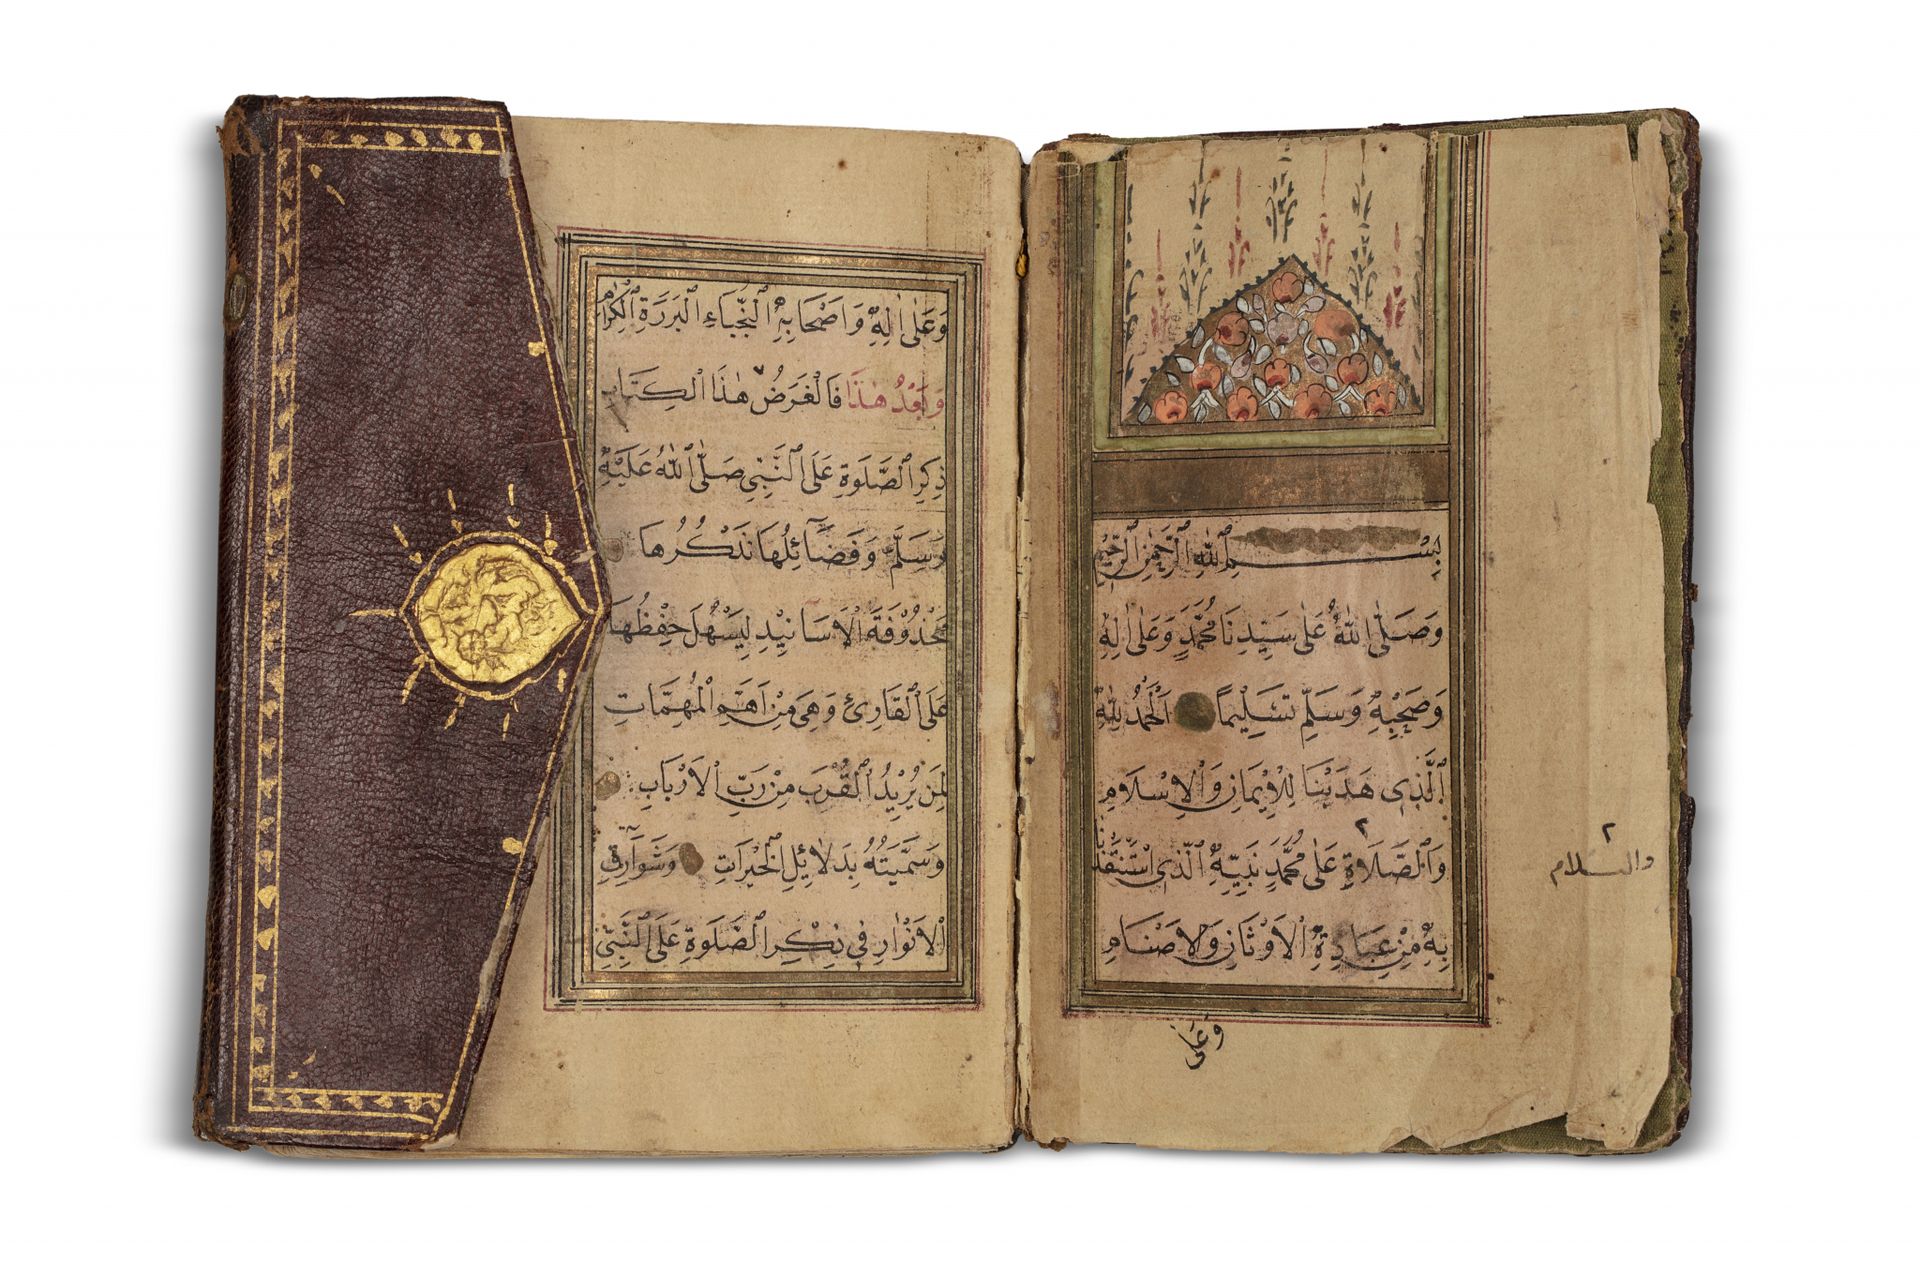 Livre de prières Ottoman Arte otomano, siglo XIX

Manuscrito árabe de 139 hojas &hellip;